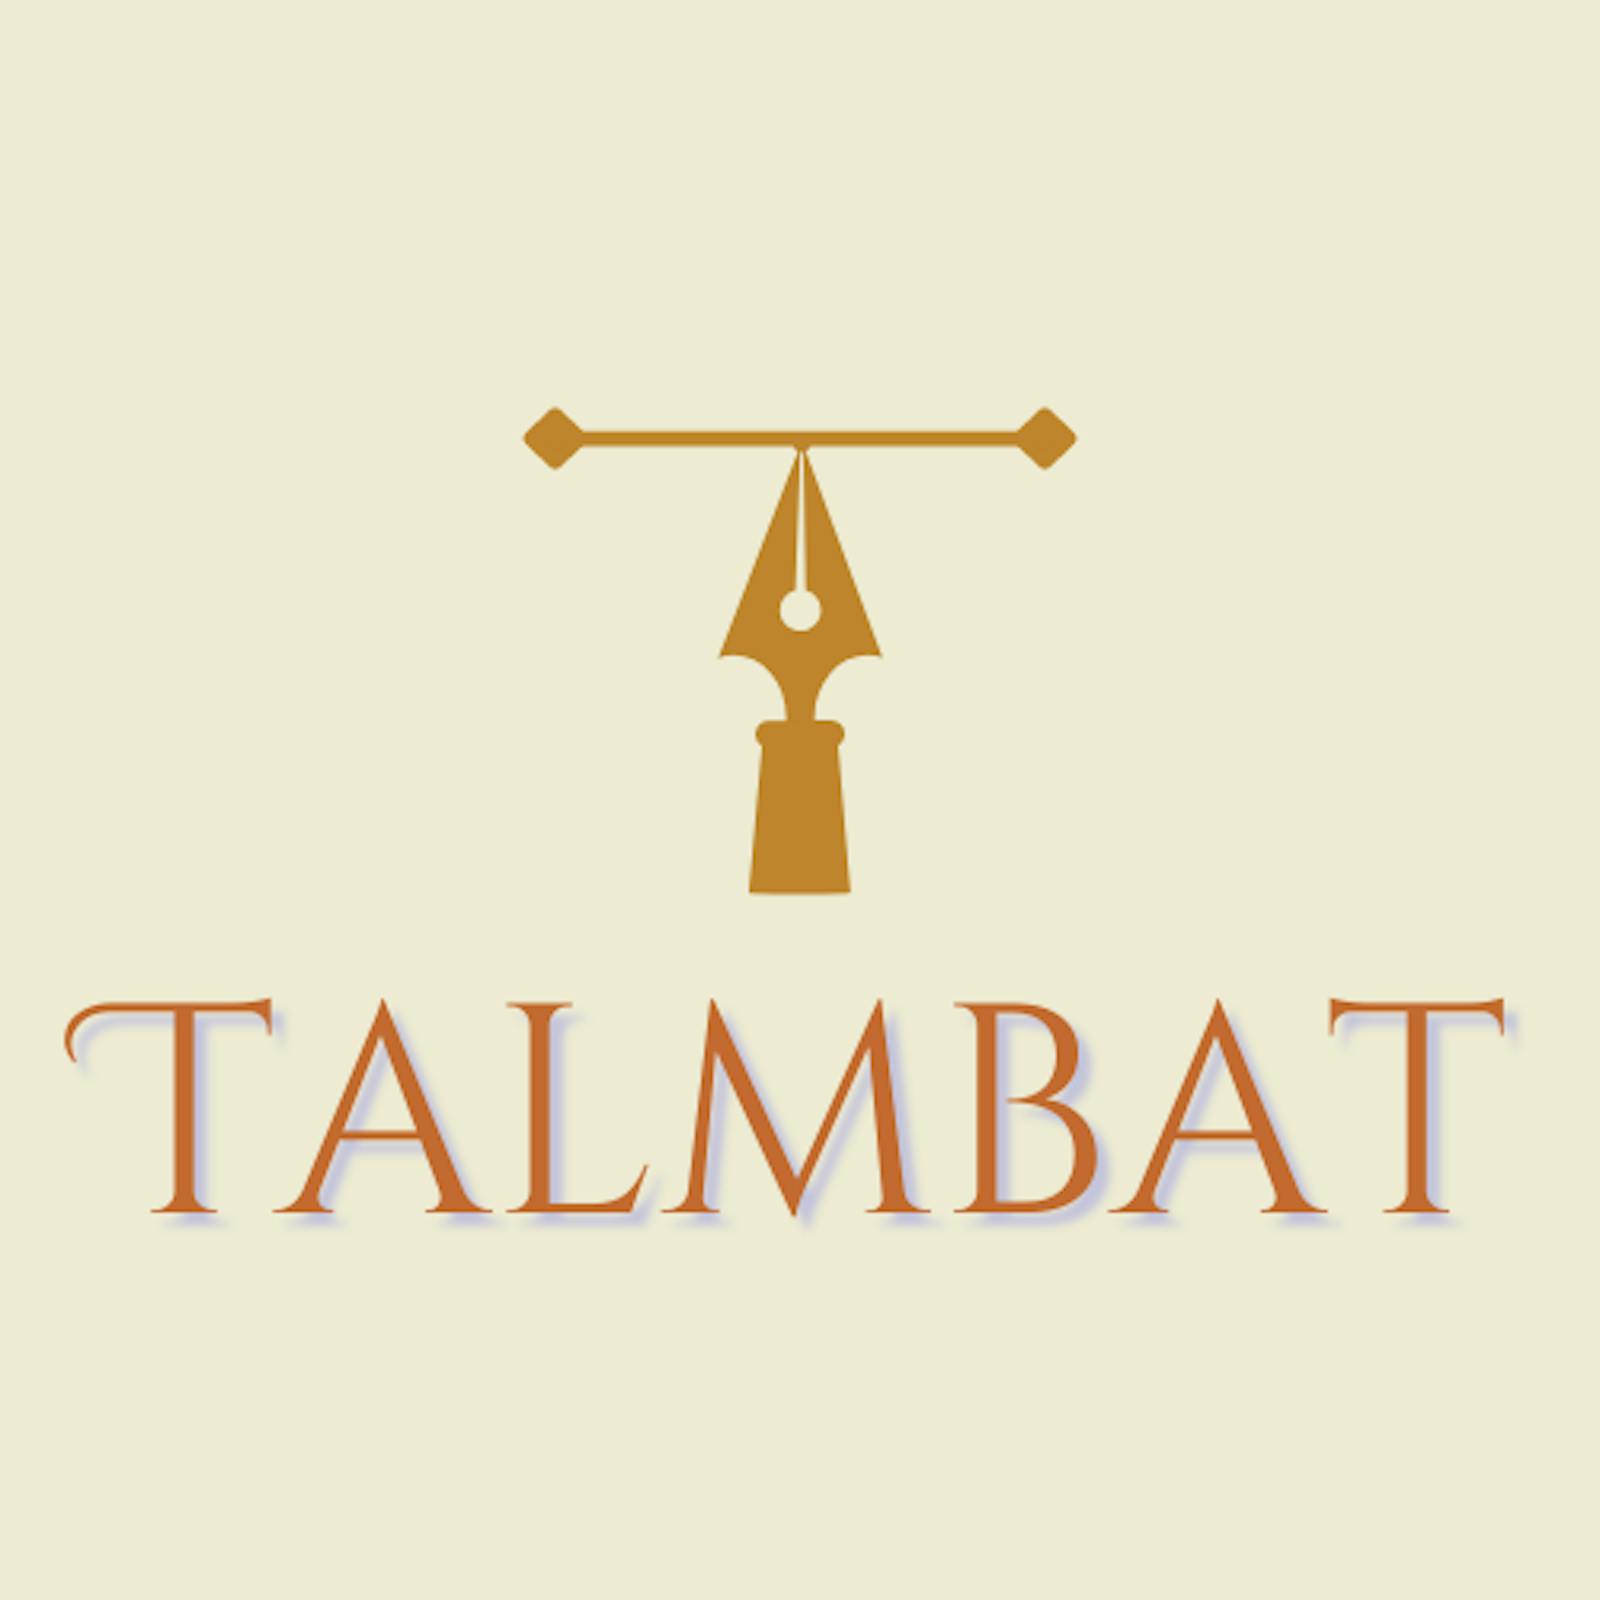 TALMBAT - The New Era of Storytelling